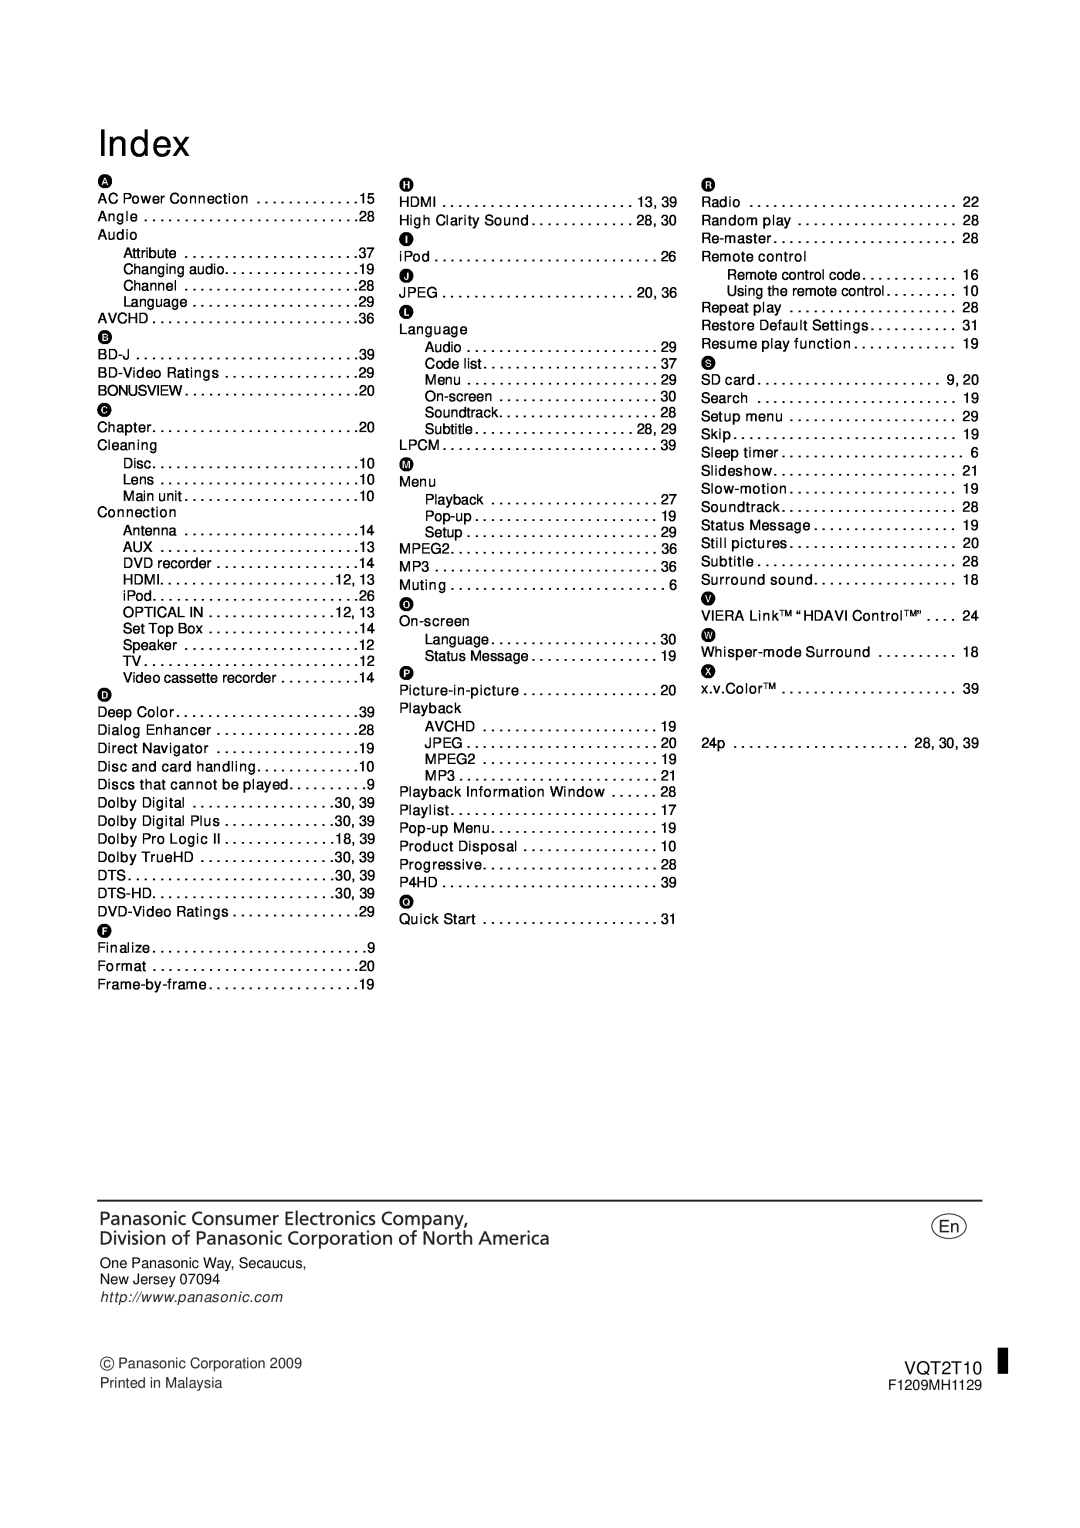 Panasonic SC-BT228, VQT2T10 warranty Index 